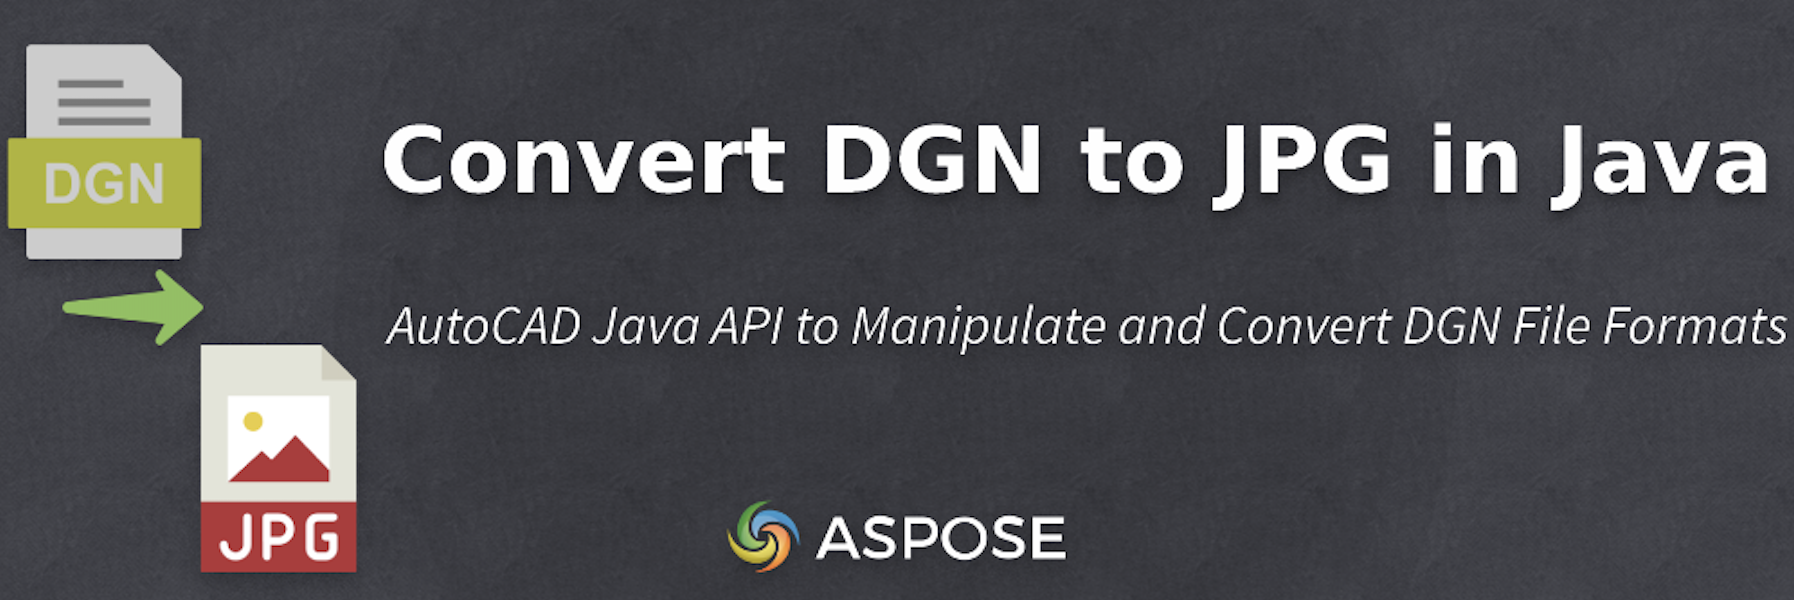 Convert DGN to JPG in Java Programmatically